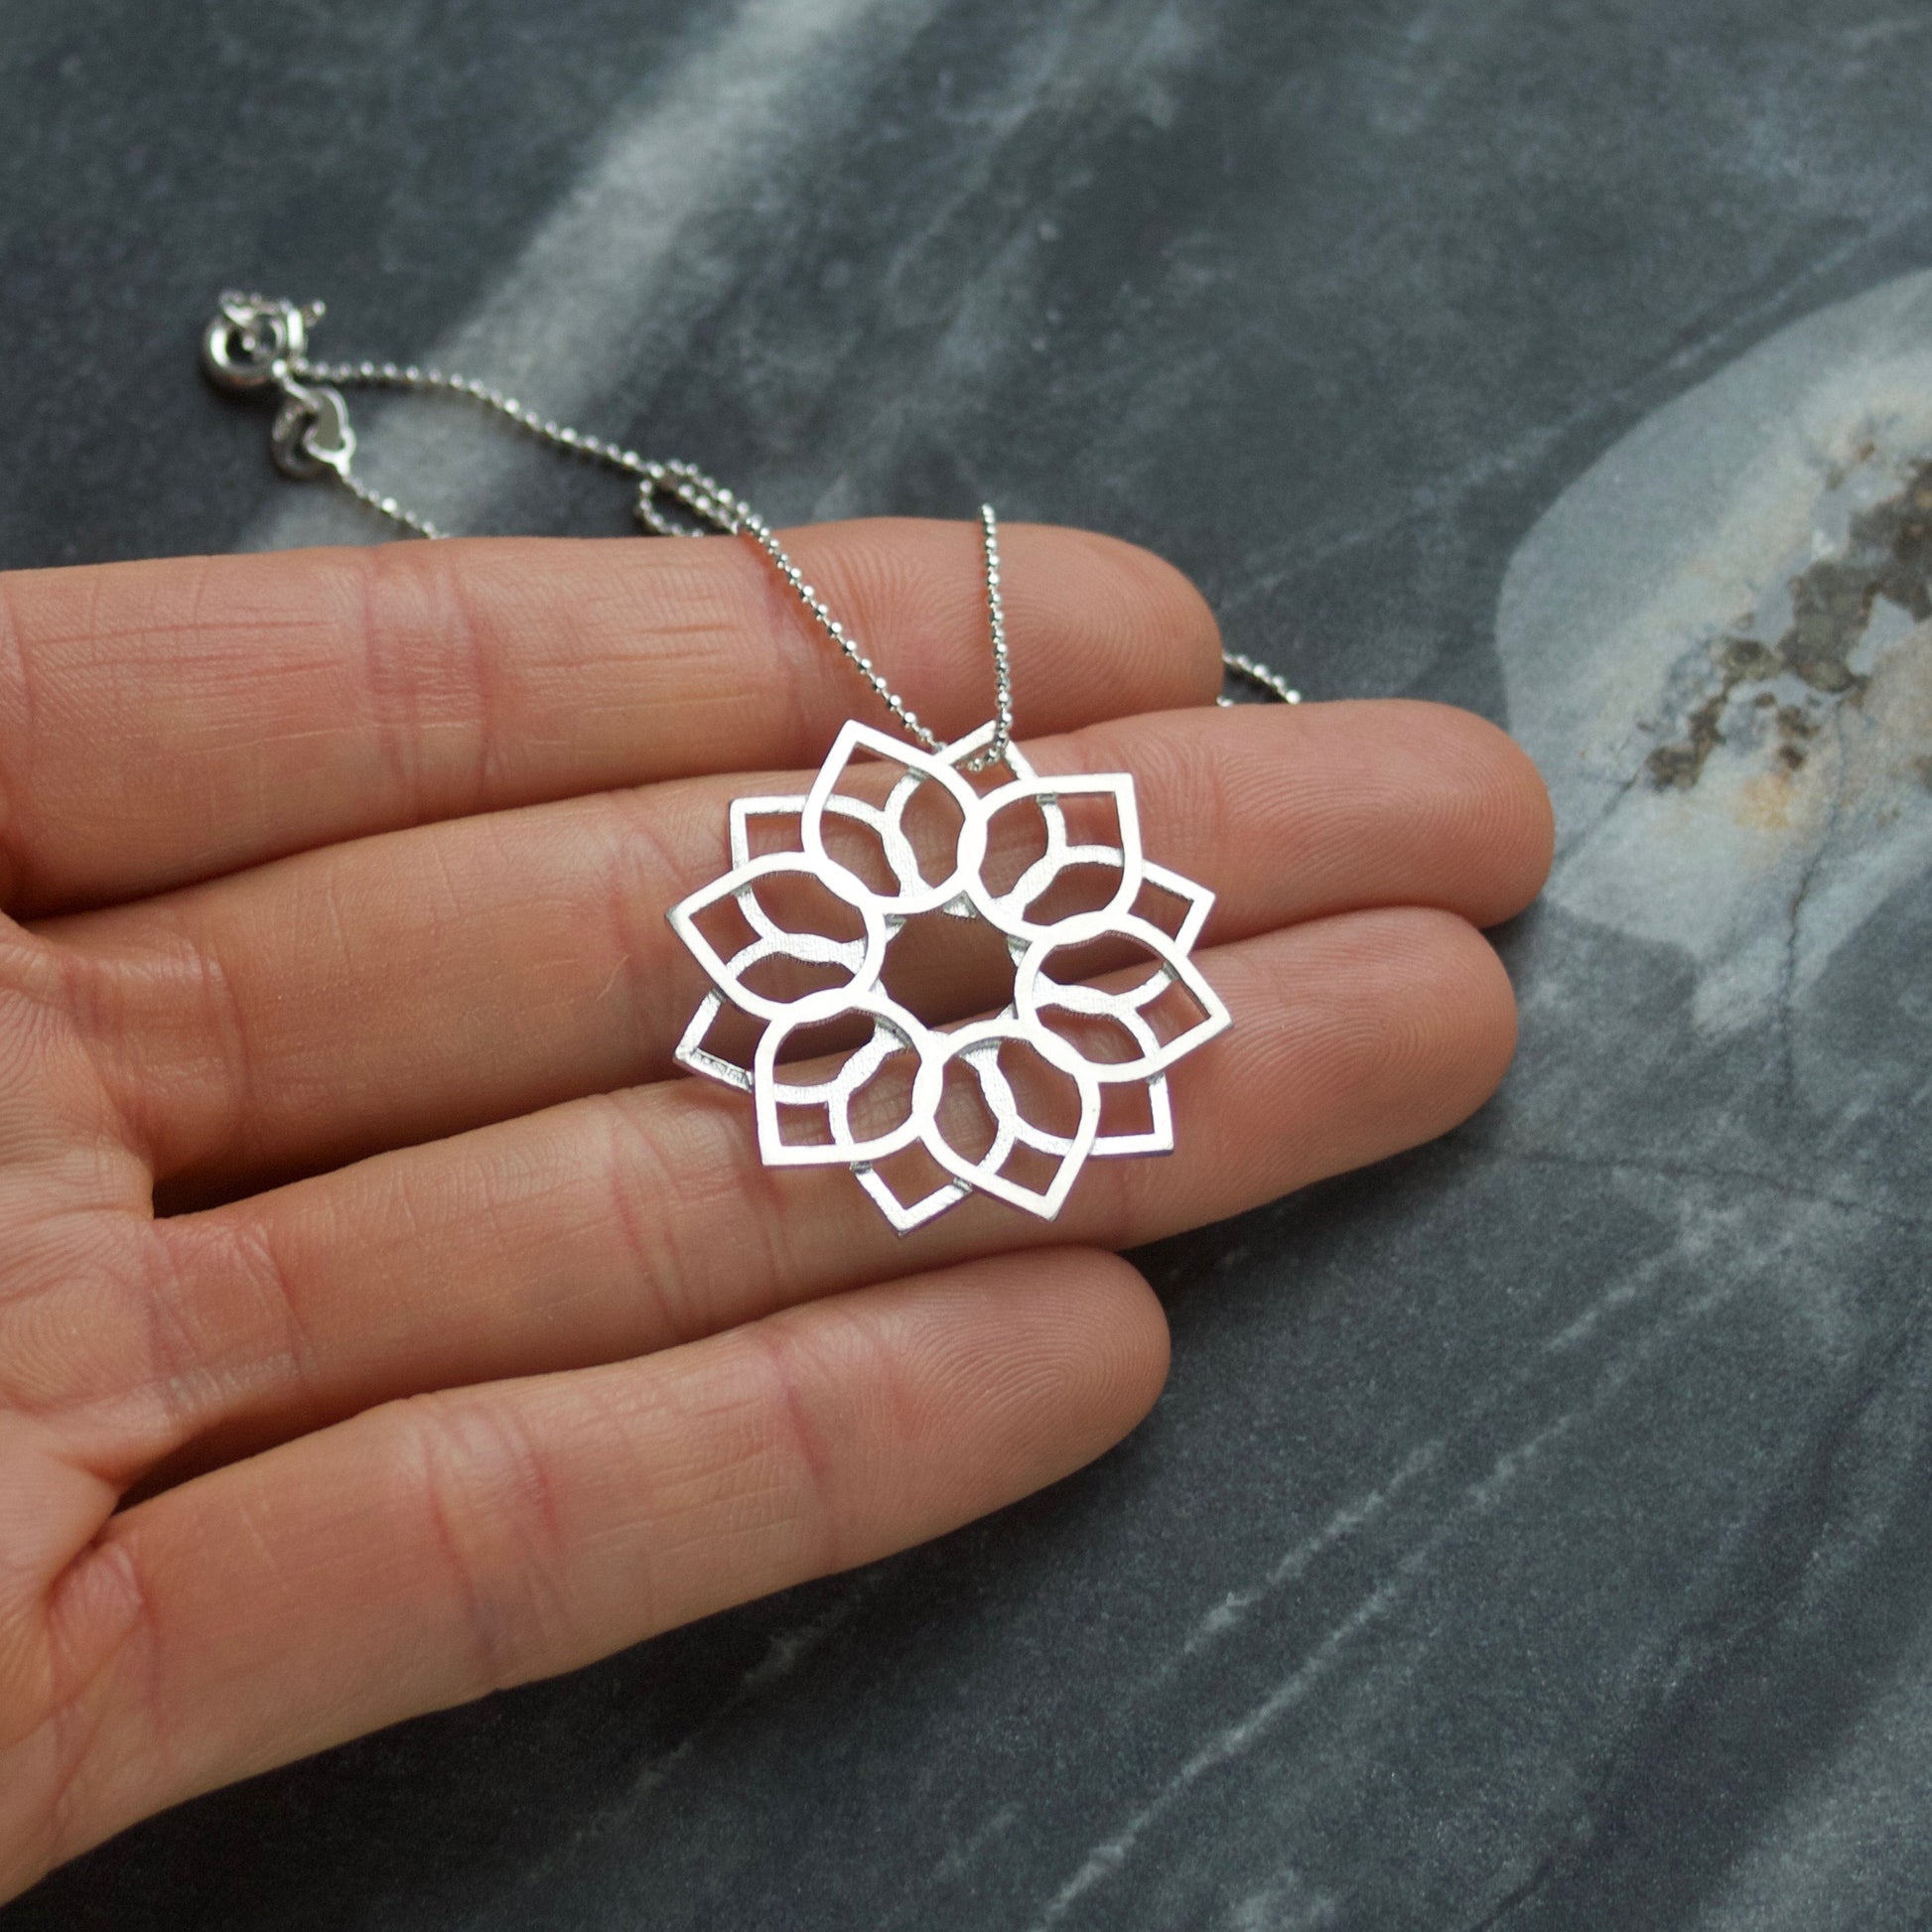 Diamond Star Blossom pendant and ornament 3D model 3D printable